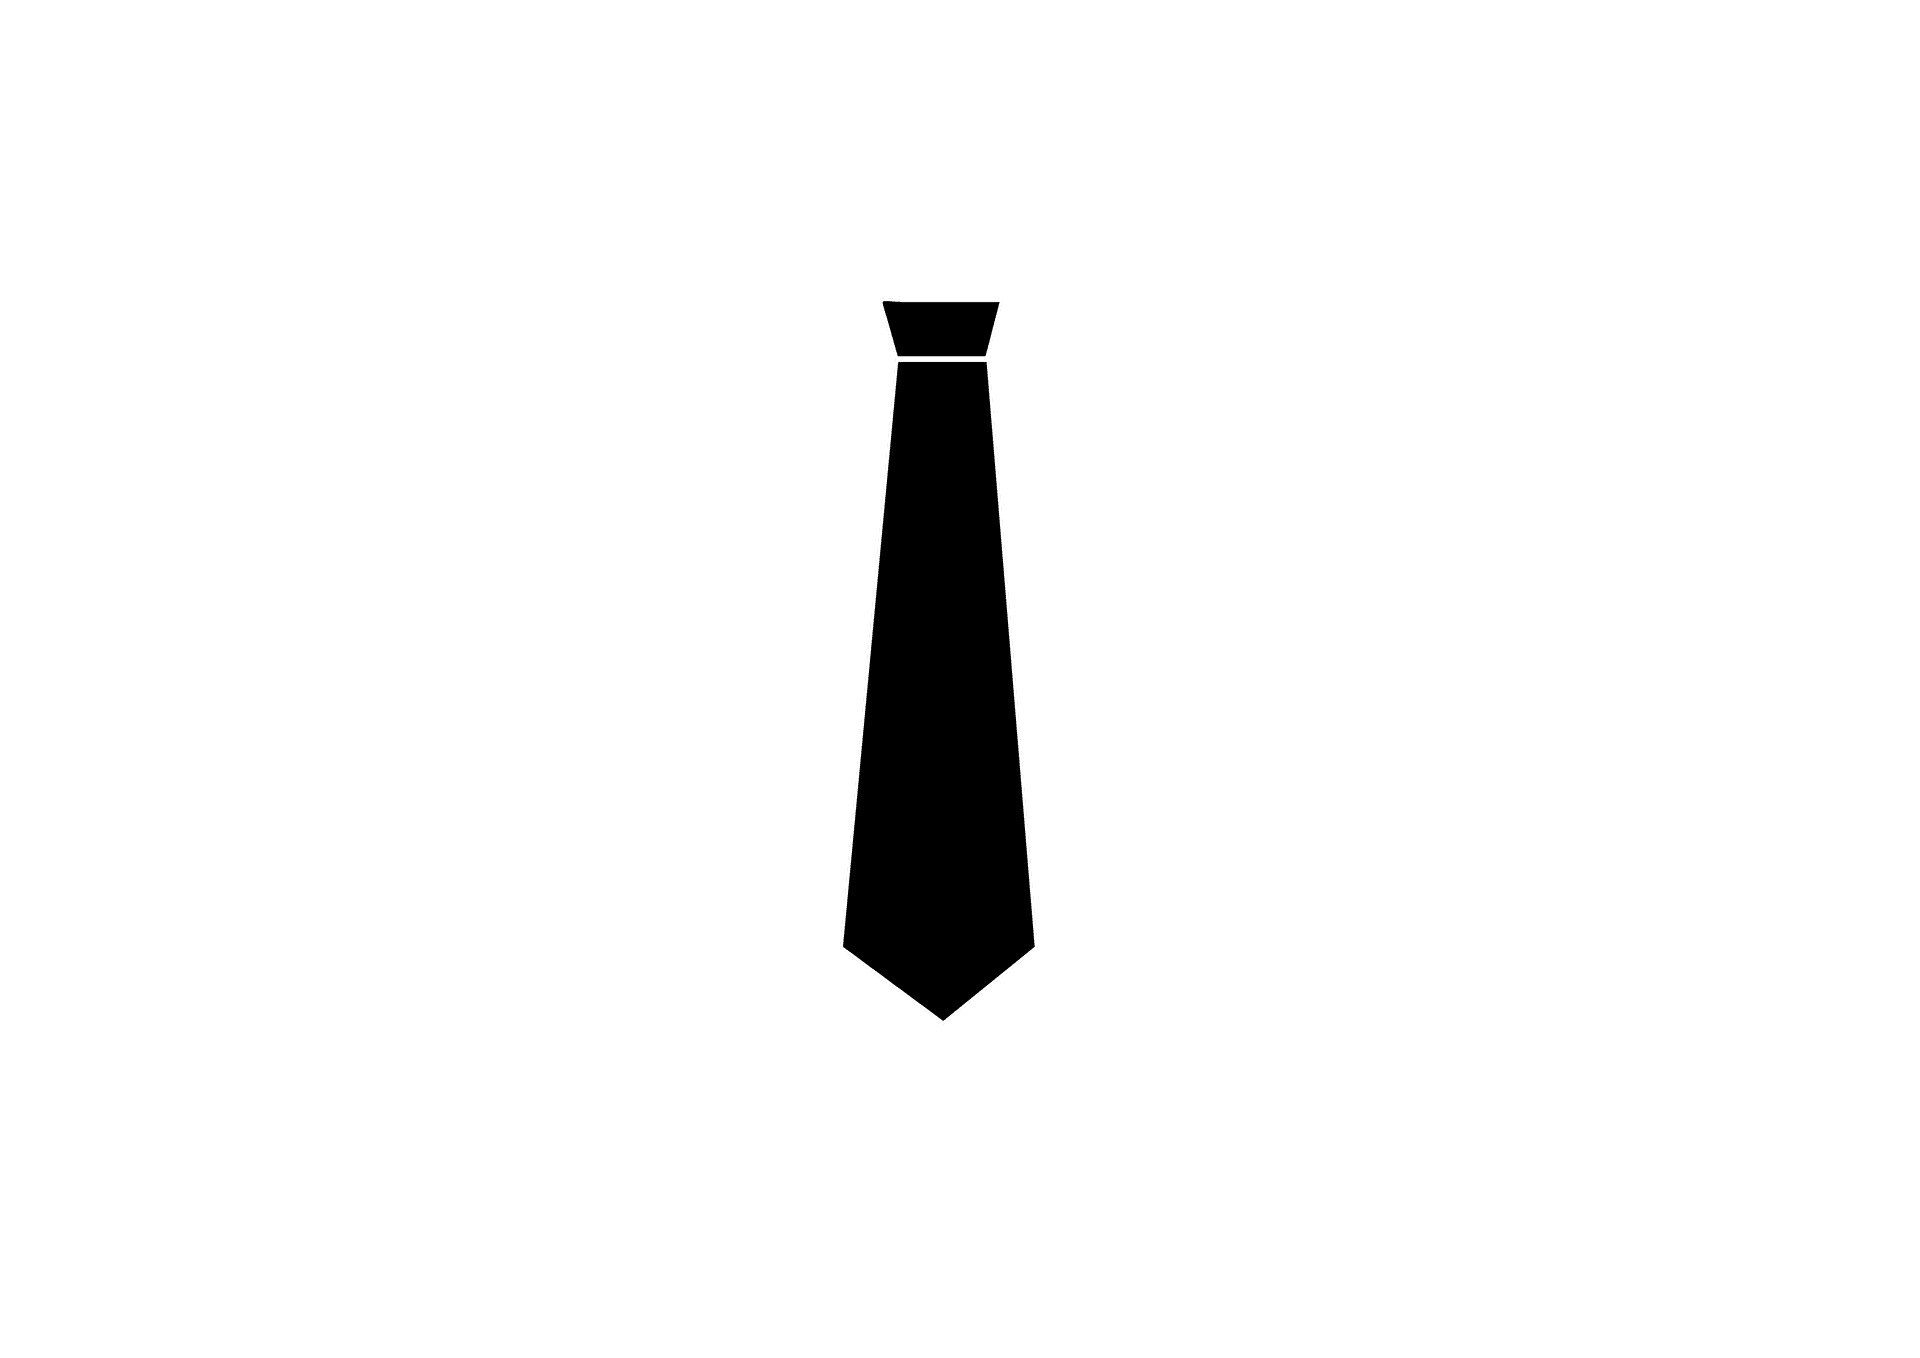 Black Necktie Iconon Teal Background PNG